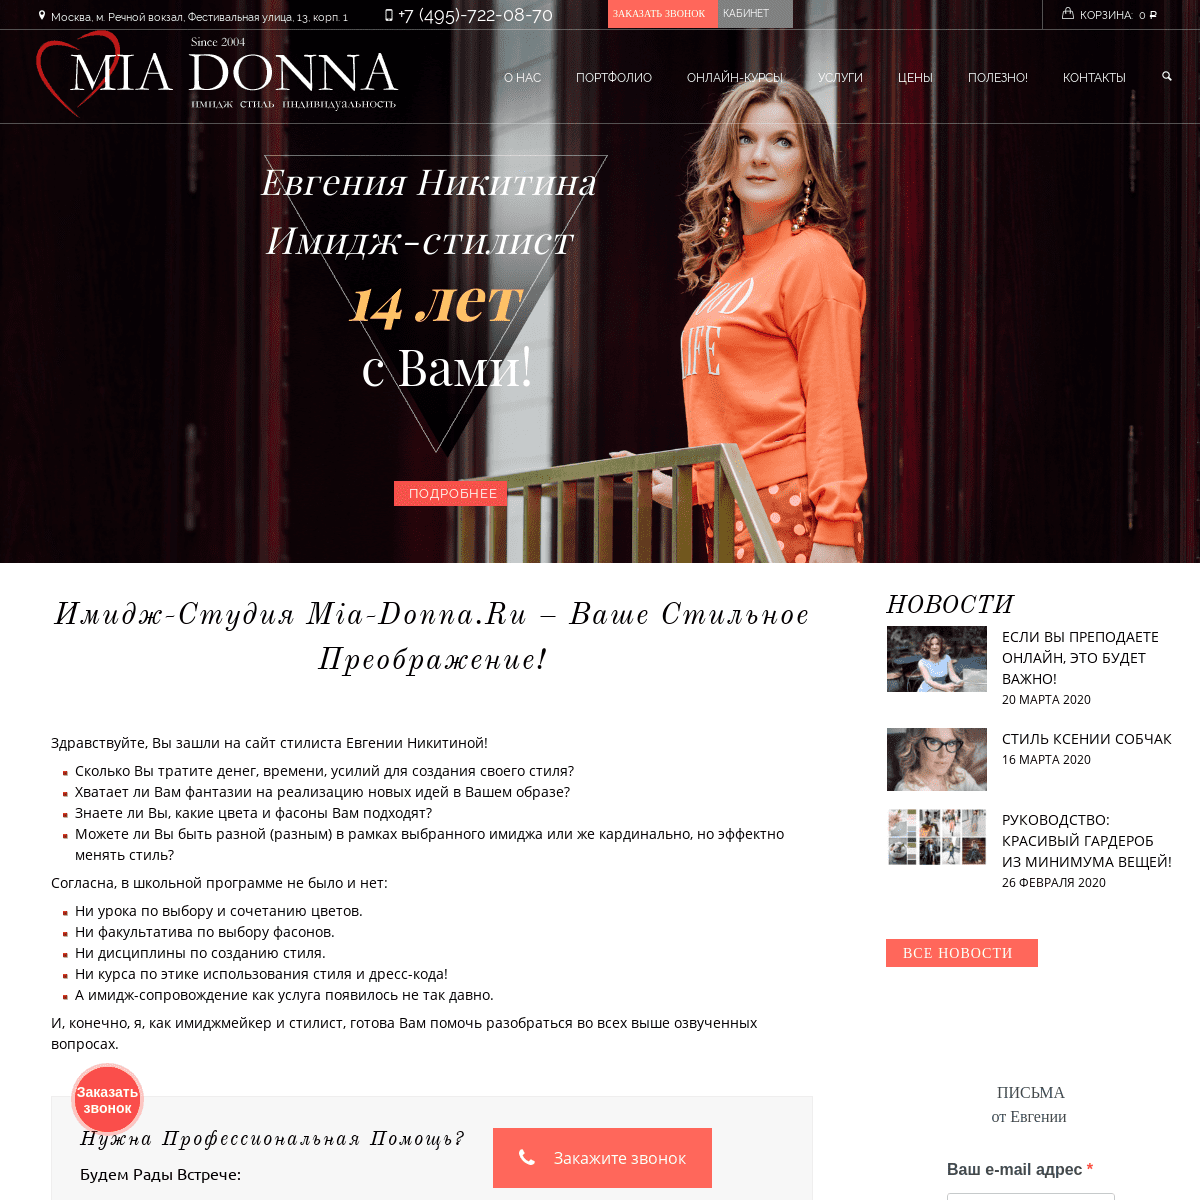 A complete backup of mia-donna.ru